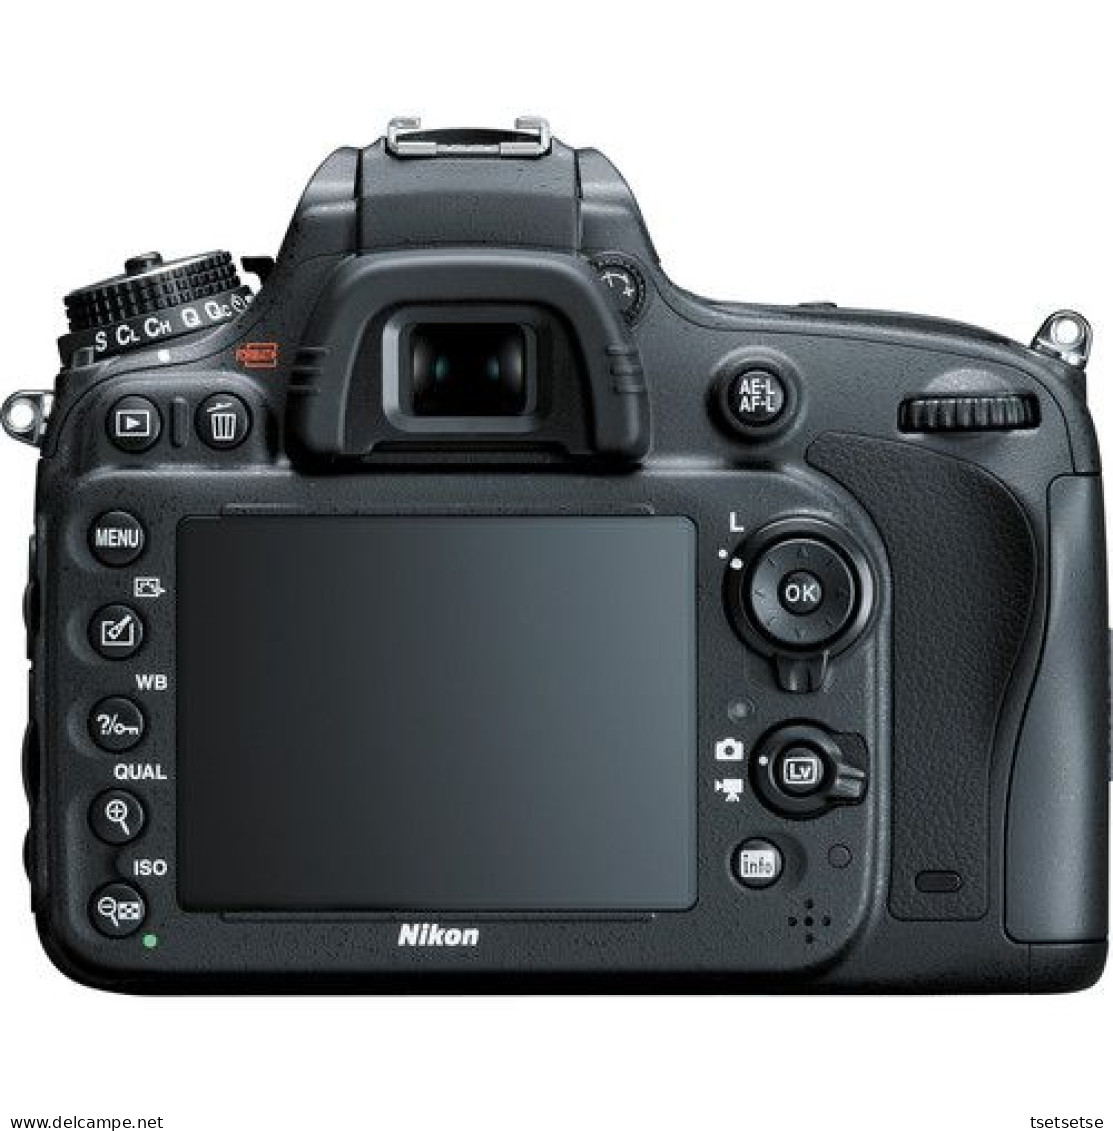 Your Choice $2,032 Or $1,099? "Brand NEW" Nikon Full-frame FX D610 DSLR Camera Kit - Cameras